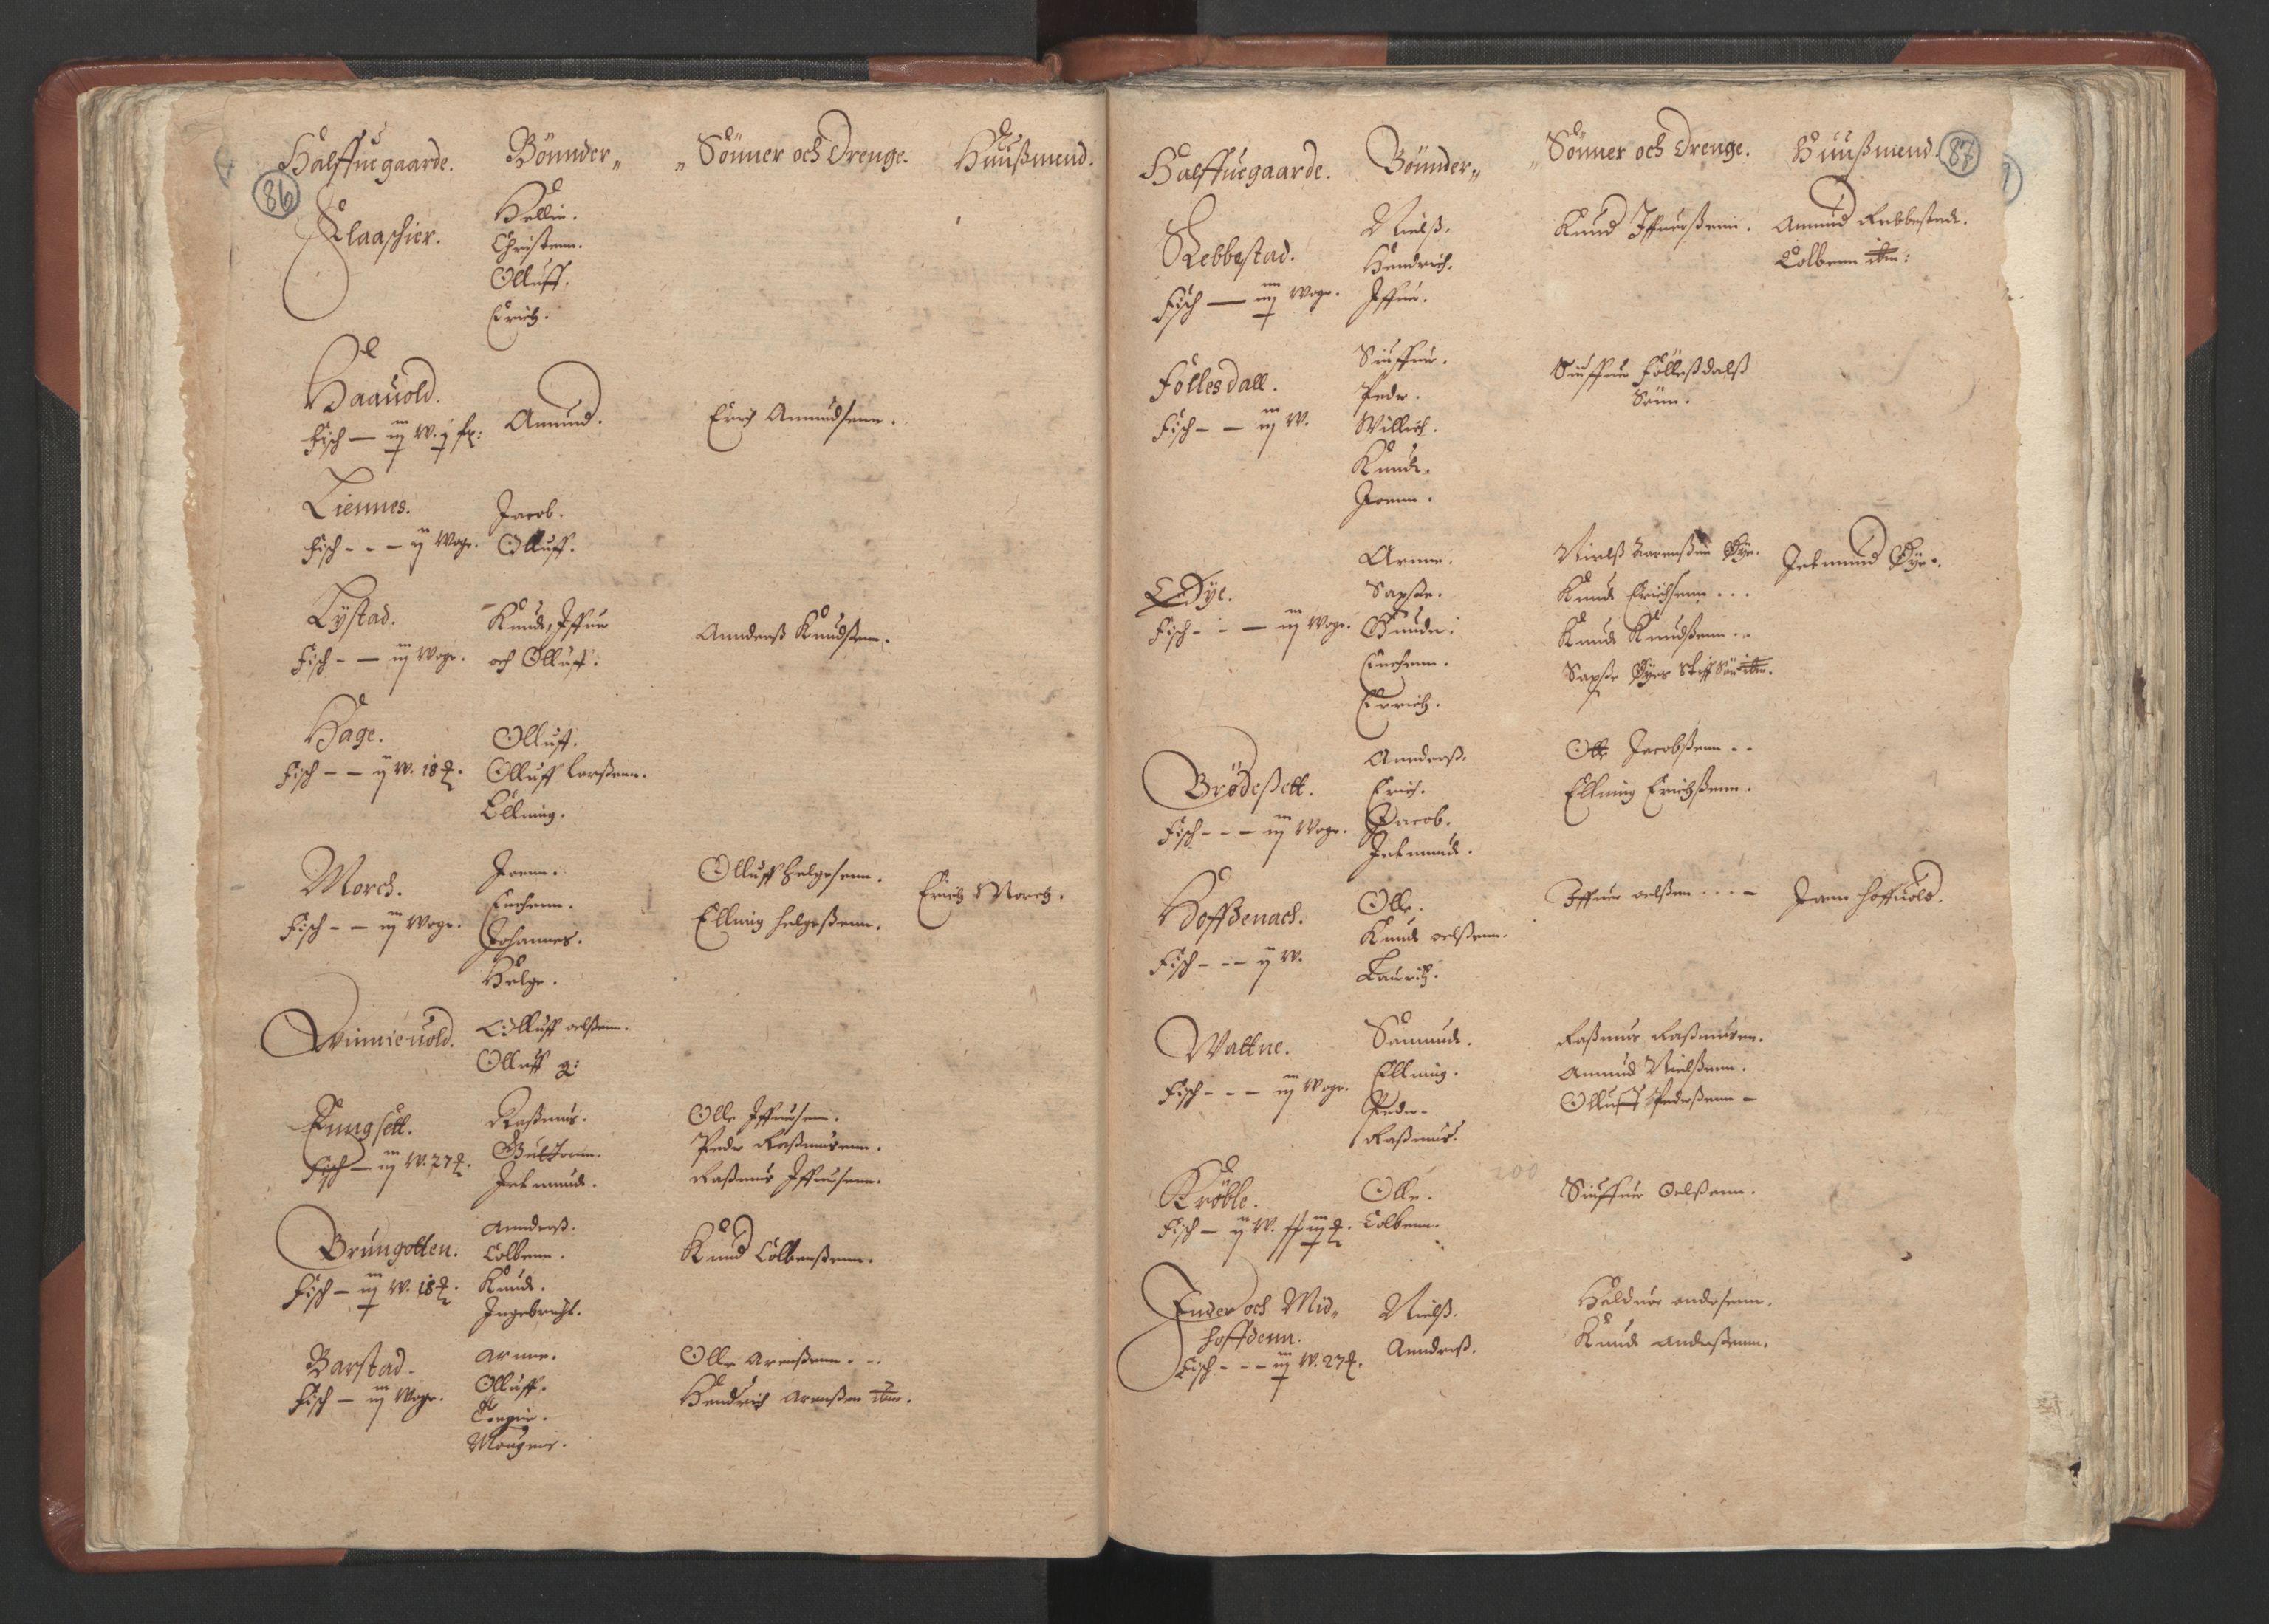 RA, Fogdenes og sorenskrivernes manntall 1664-1666, nr. 16: Romsdal fogderi og Sunnmøre fogderi, 1664-1665, s. 86-87